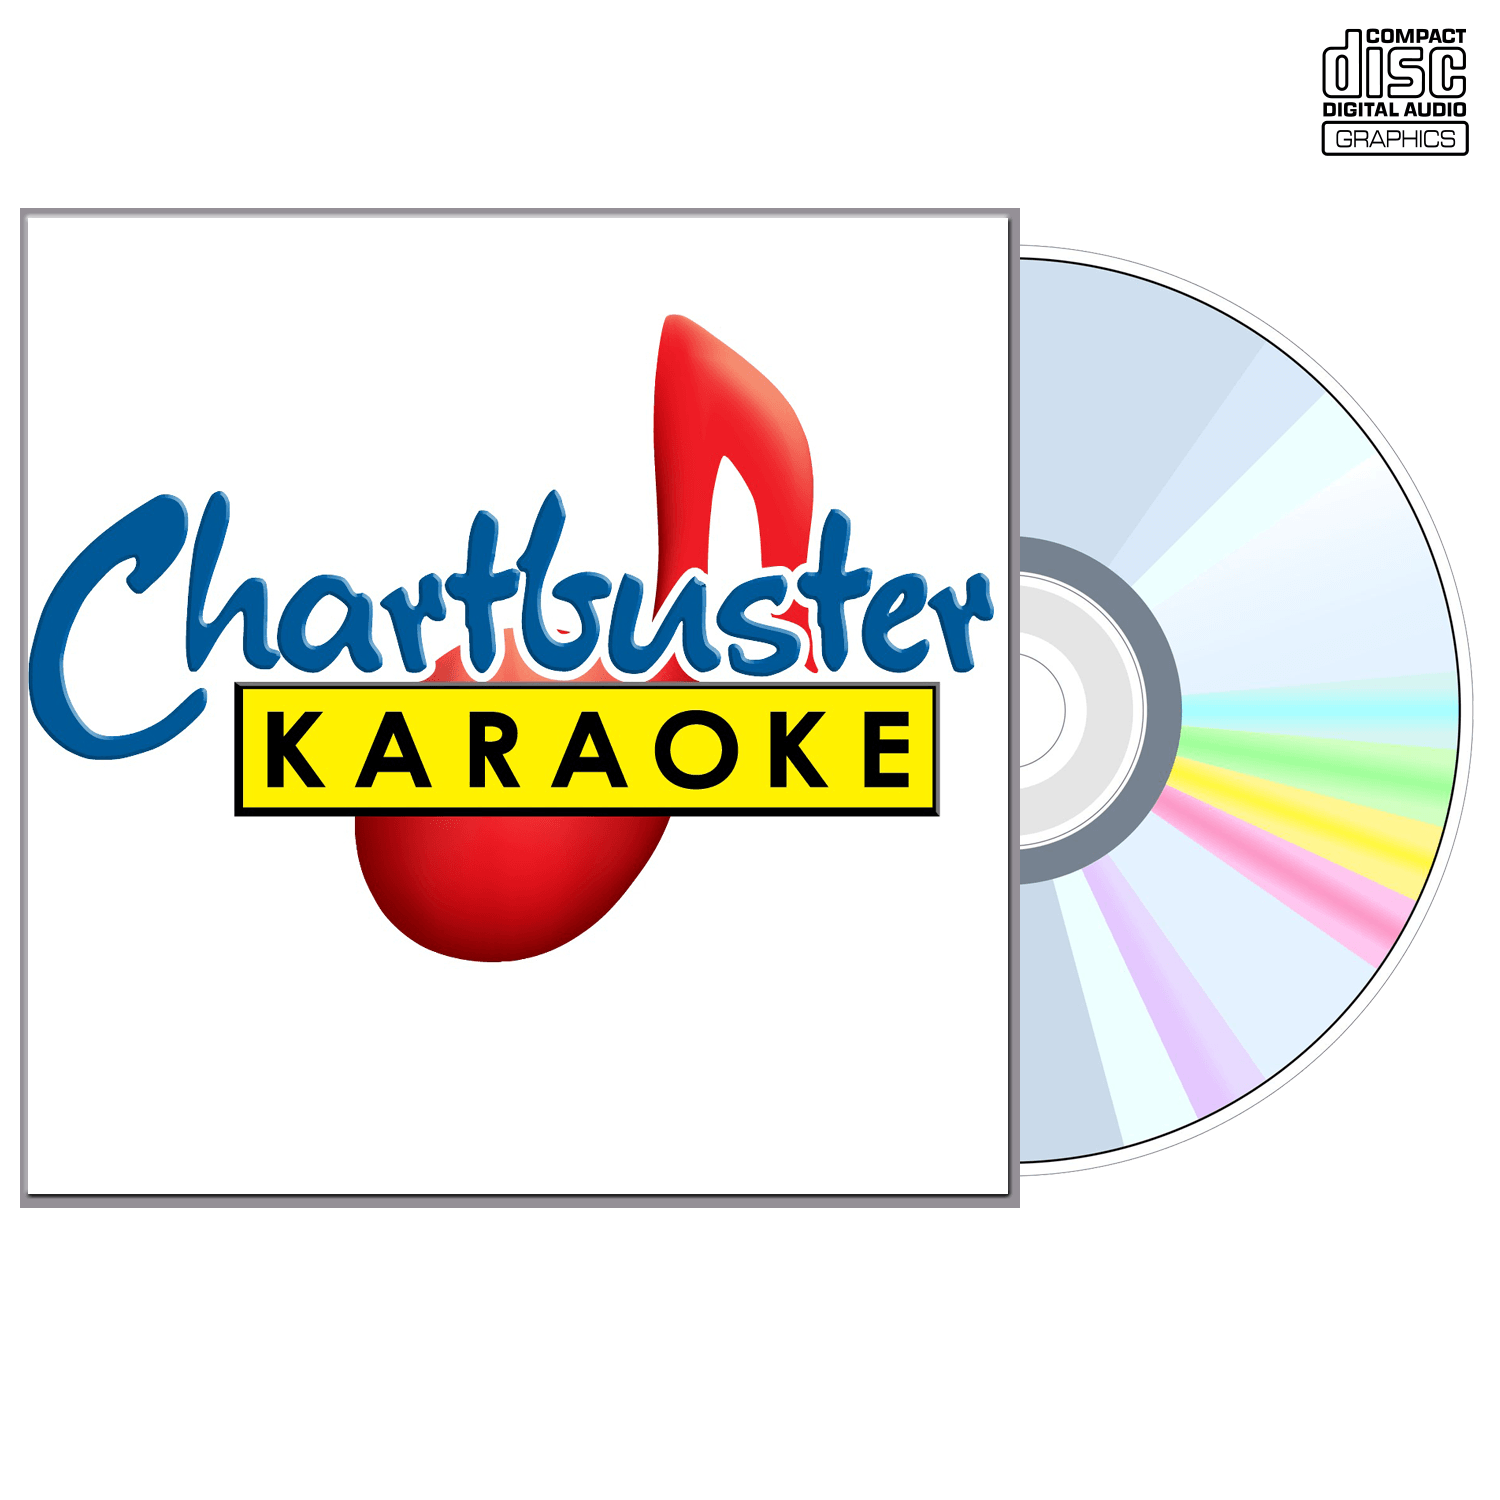 Alan Jackson Vol 6 - CD+G - Chartbuster Karaoke - Karaoke Home Entertainment